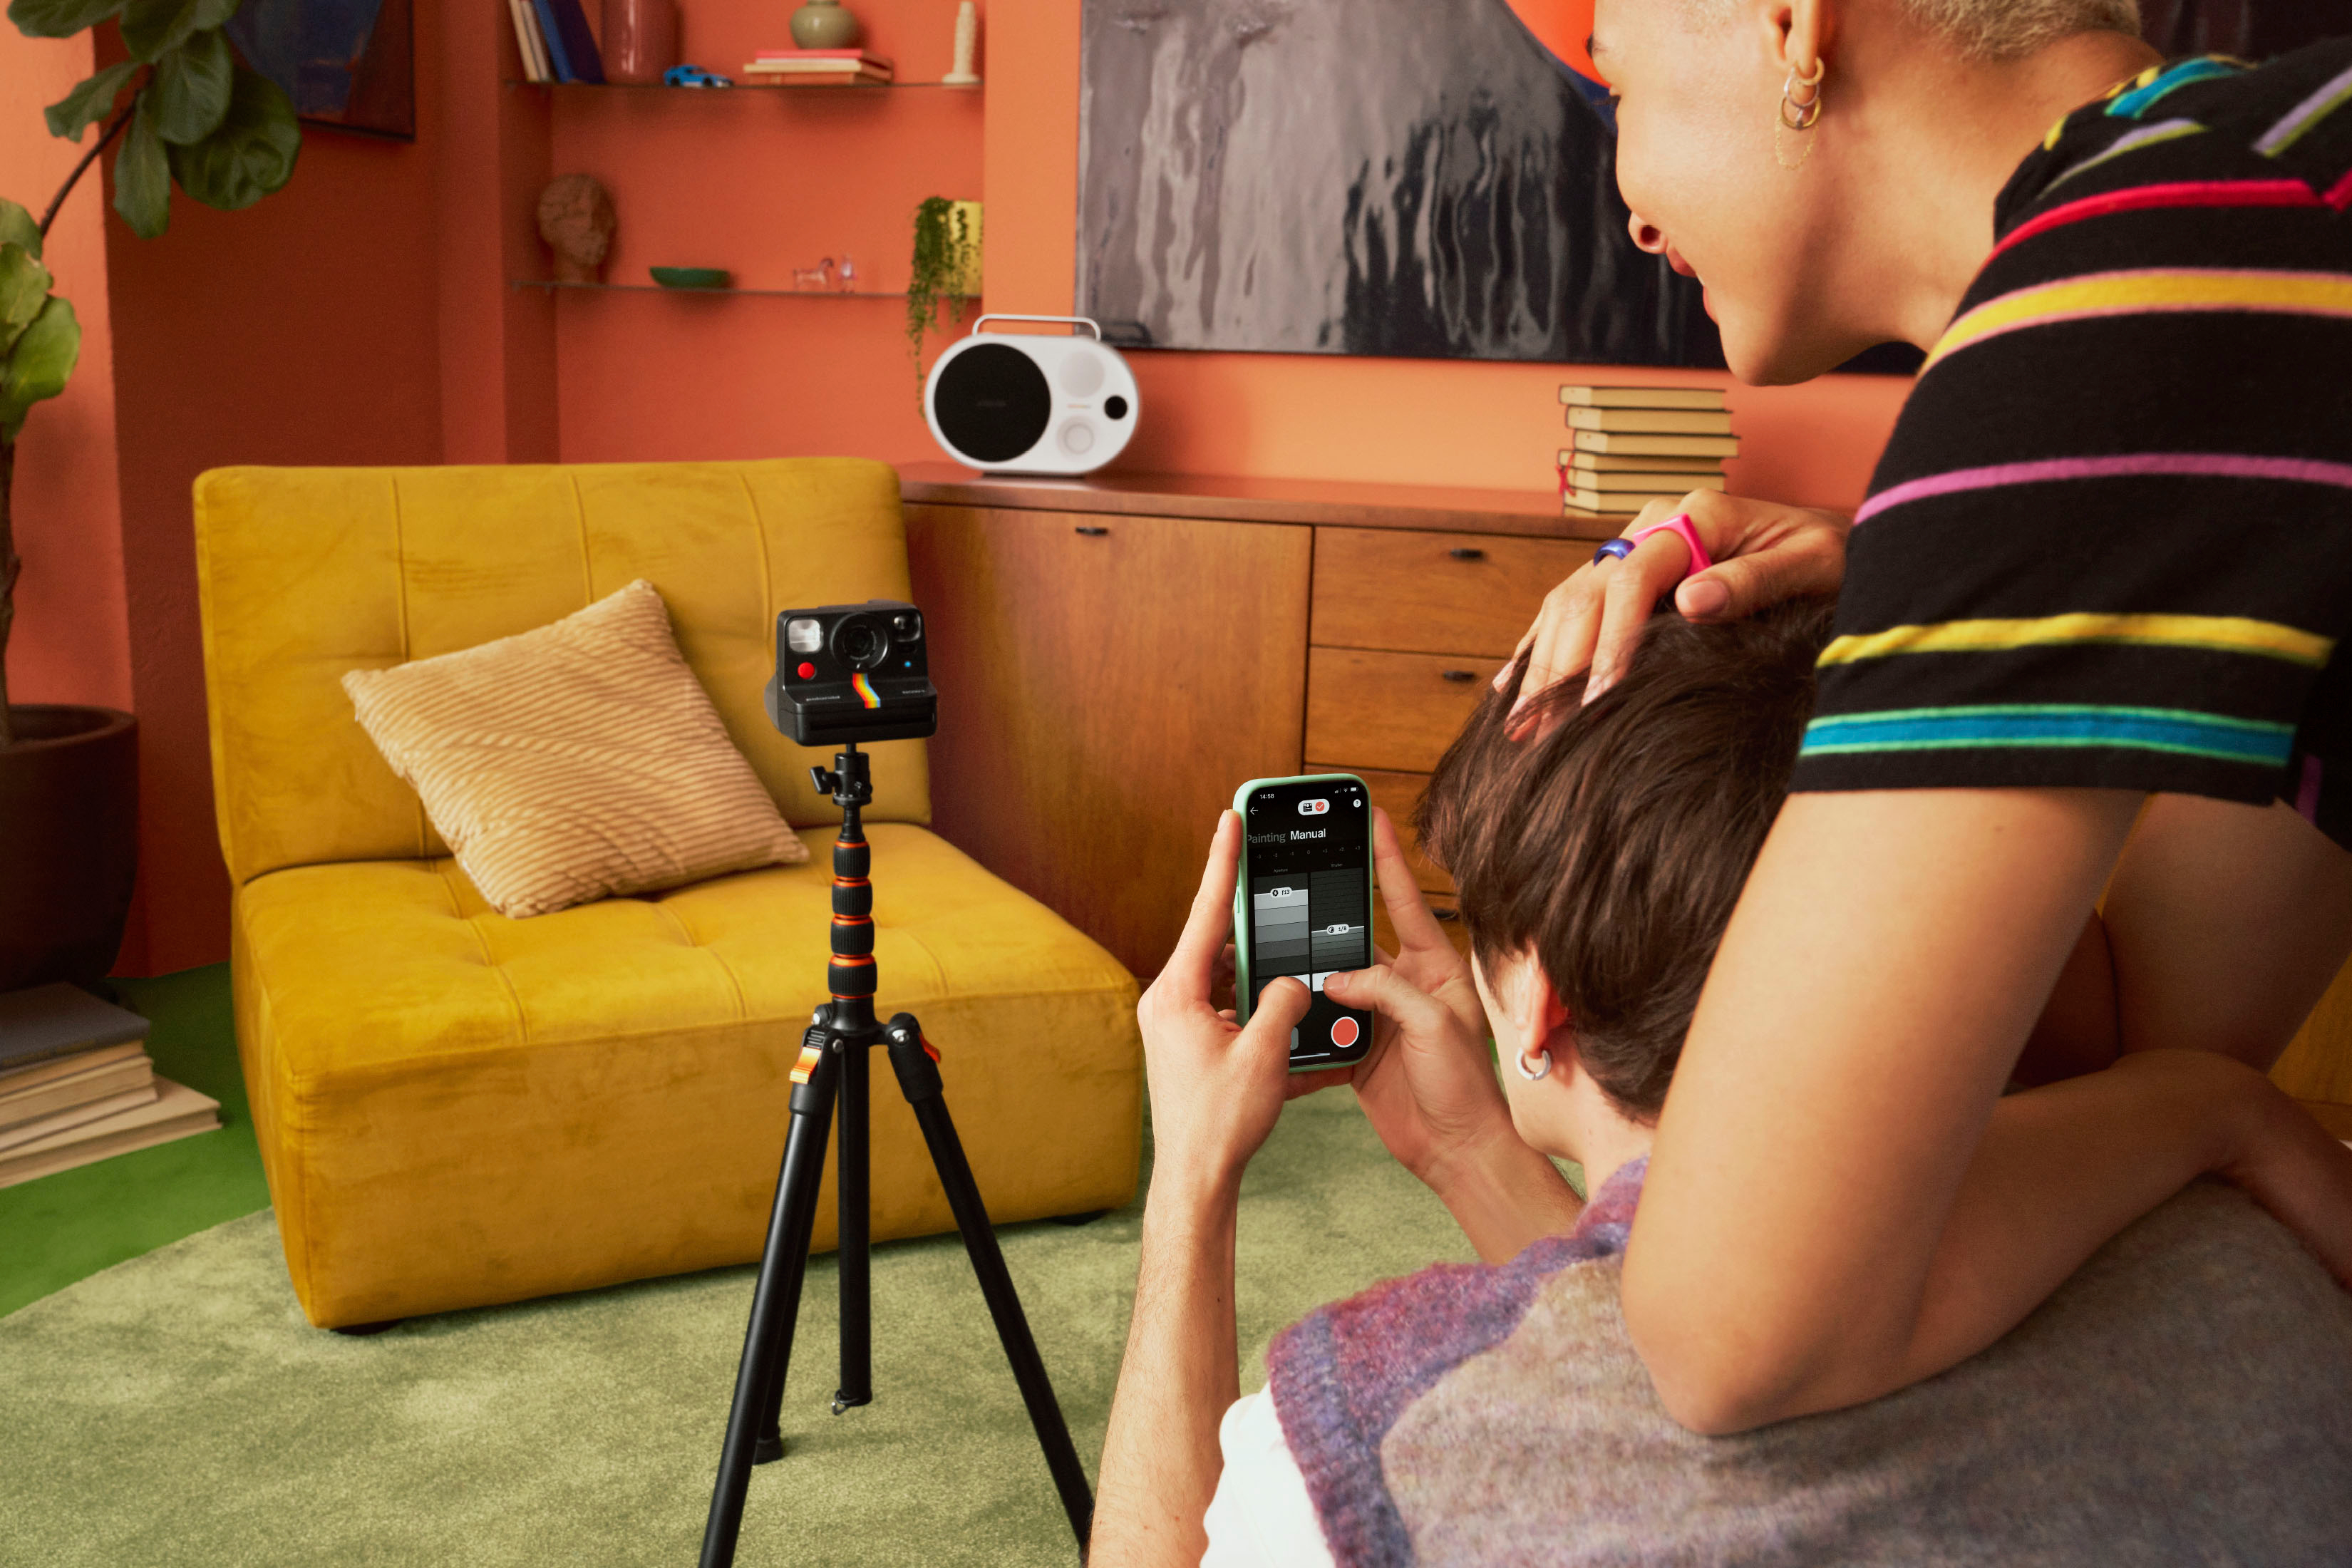 Polaroid Now+ Instant Film Camera Generation 2 Black 009076 - Best Buy